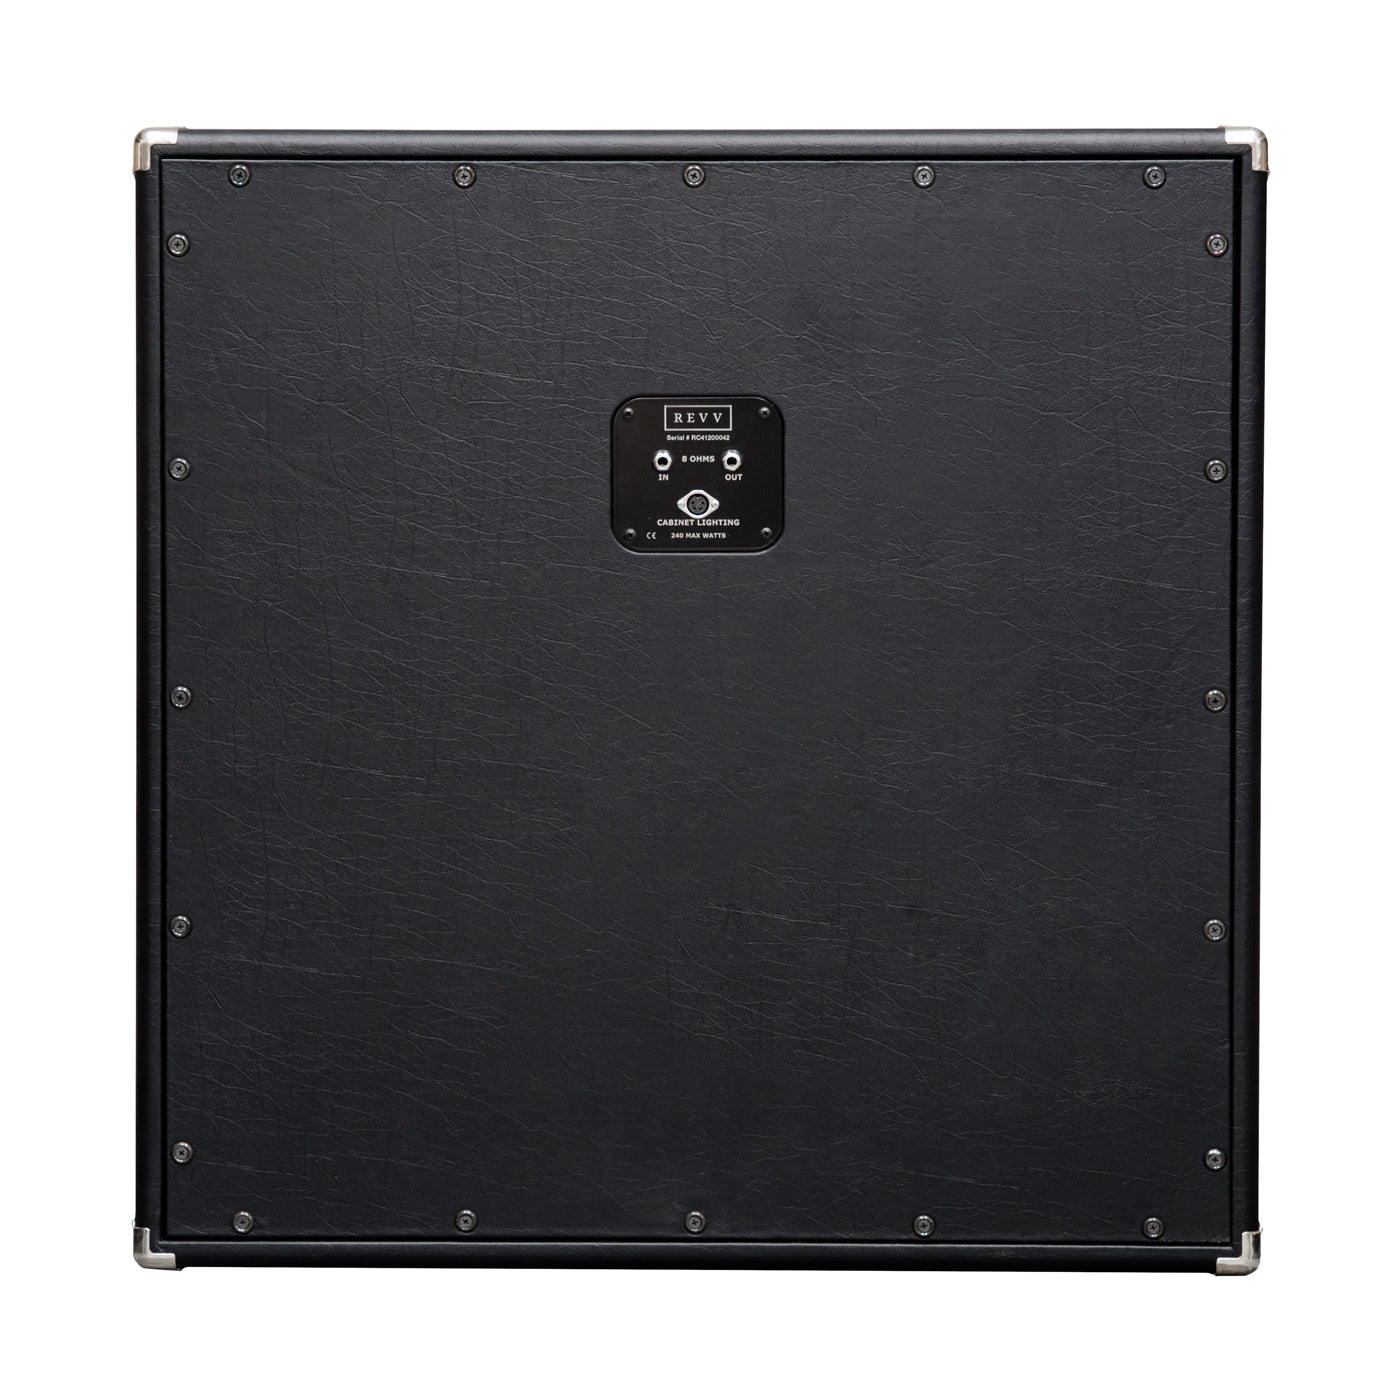 REVV 4x12 Guitar Speaker Cabinet